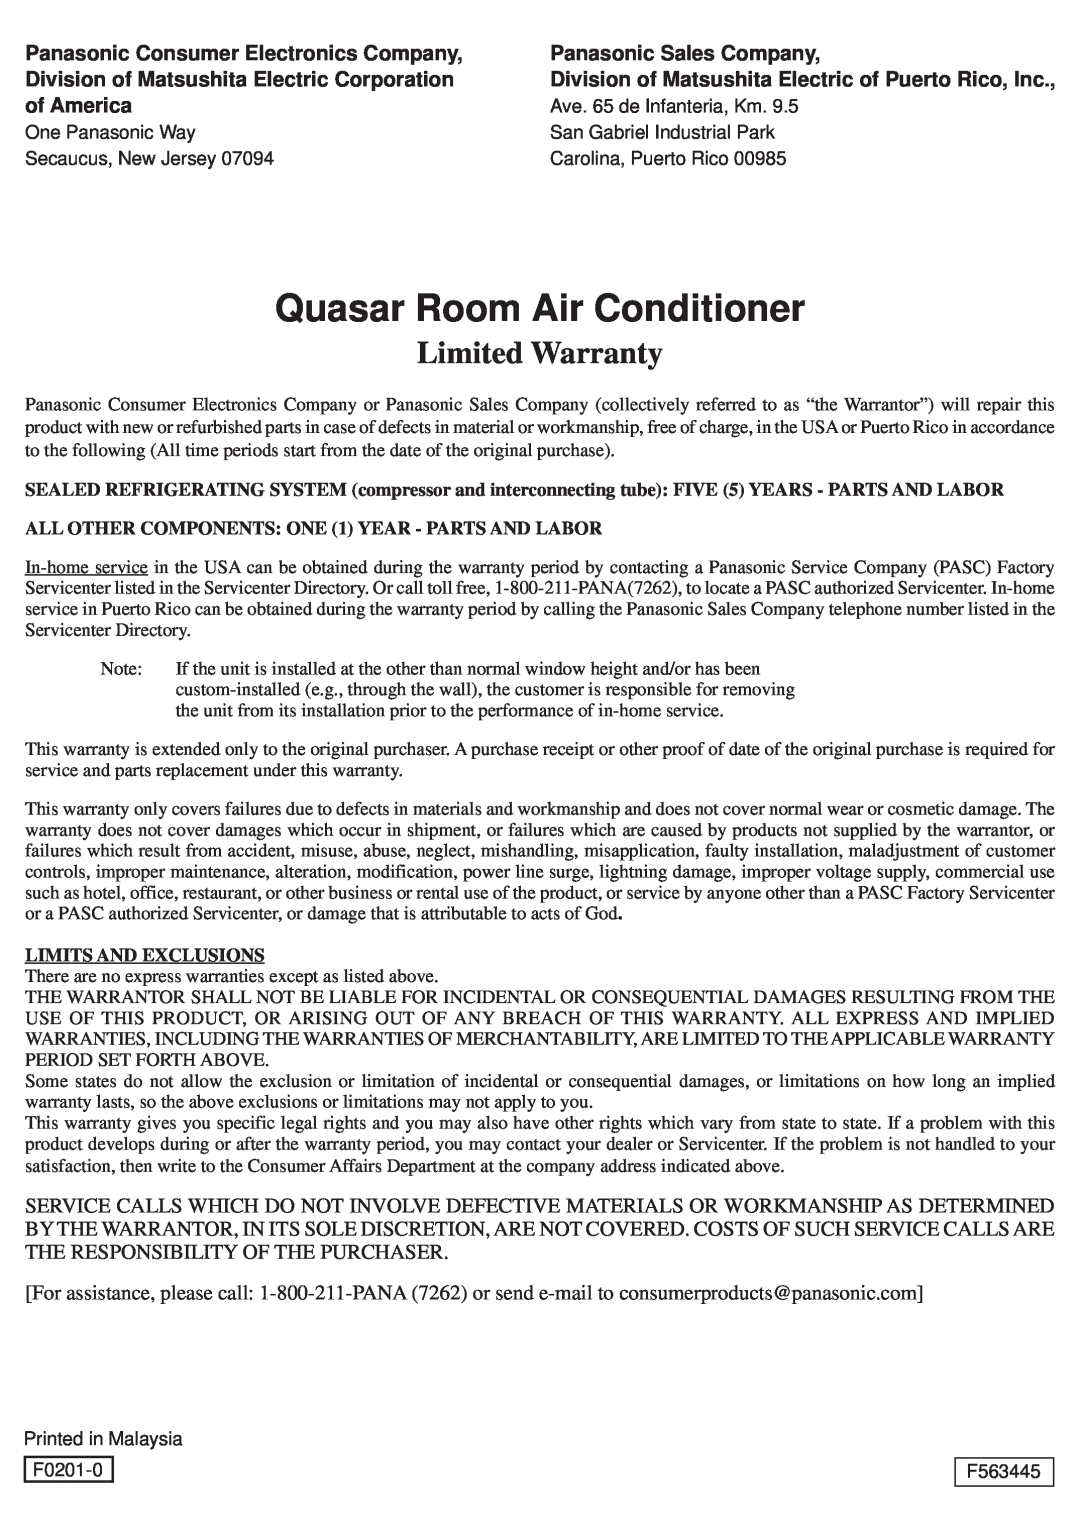 Panasonic HQ-2101SH Quasar Room Air Conditioner, Limited Warranty, Panasonic Consumer Electronics Company, of America 